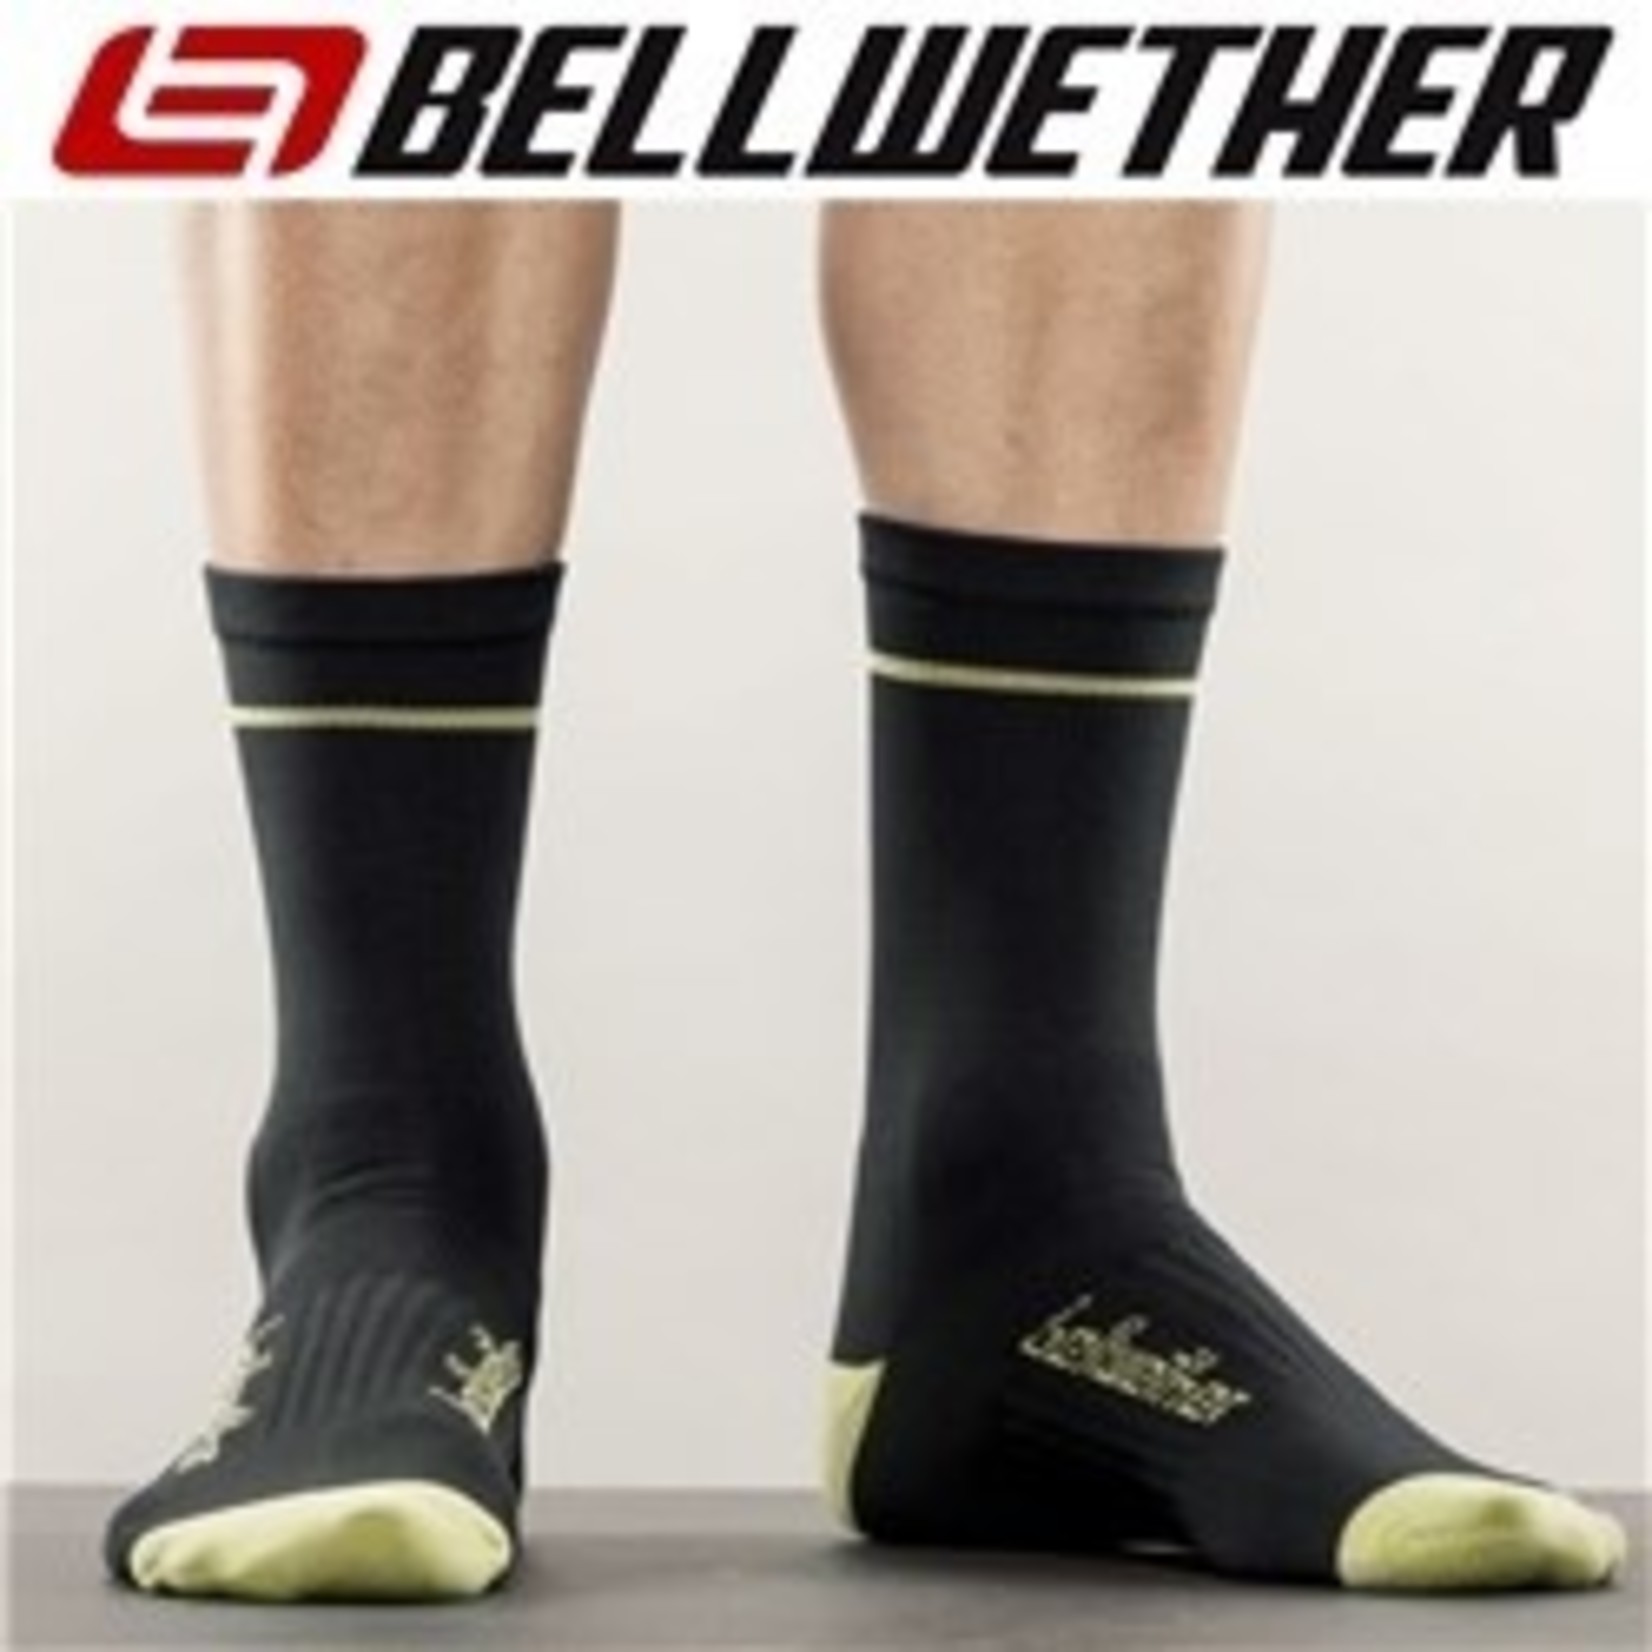 Bellwether Bellwether Cycling Sock - Optime Sock - Coolmax And Microfiber - Black/Hi-Vis